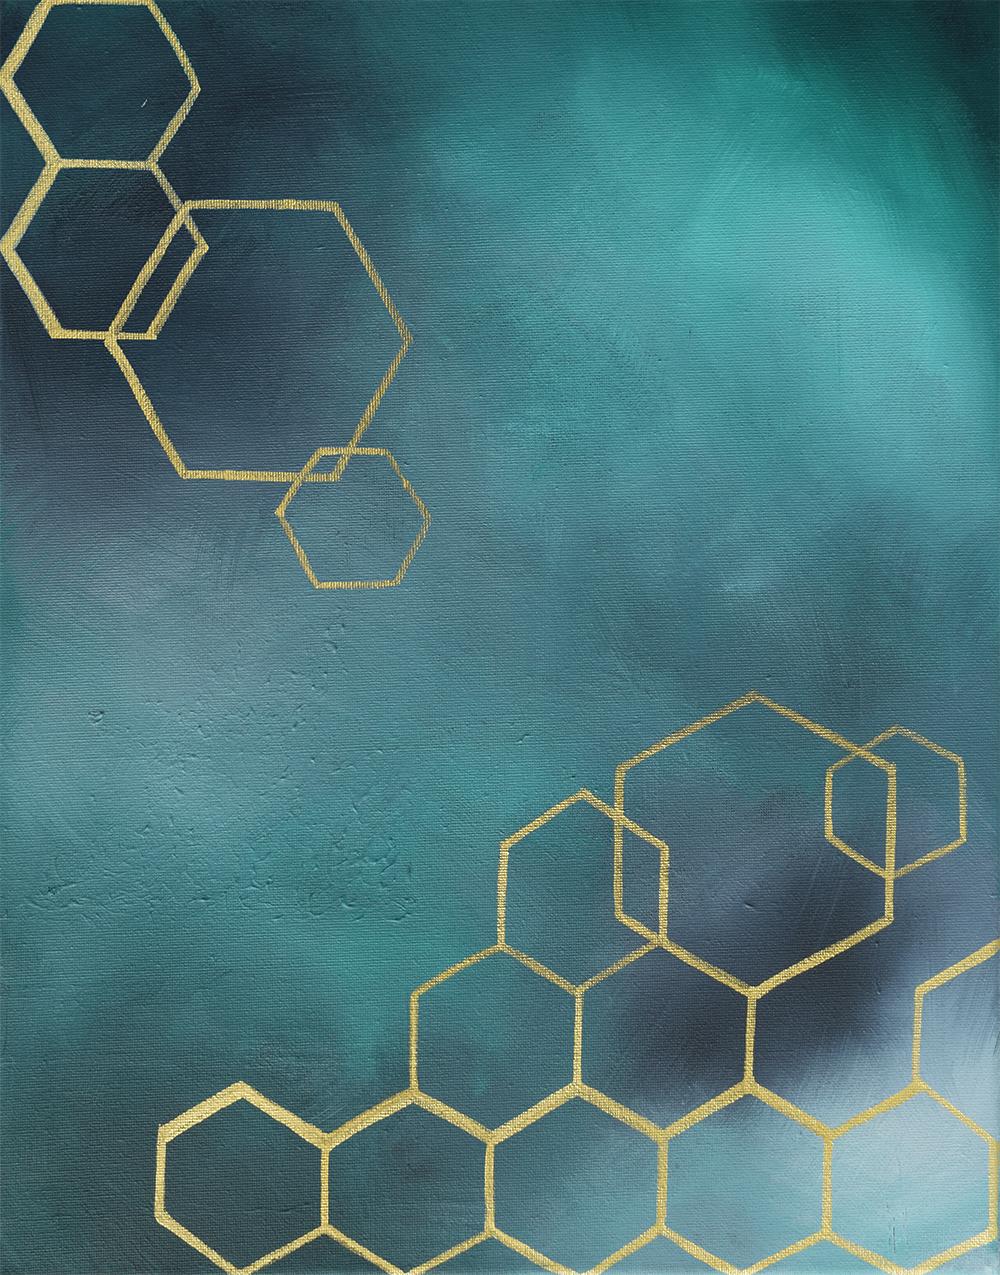 Hexagon art print for sale